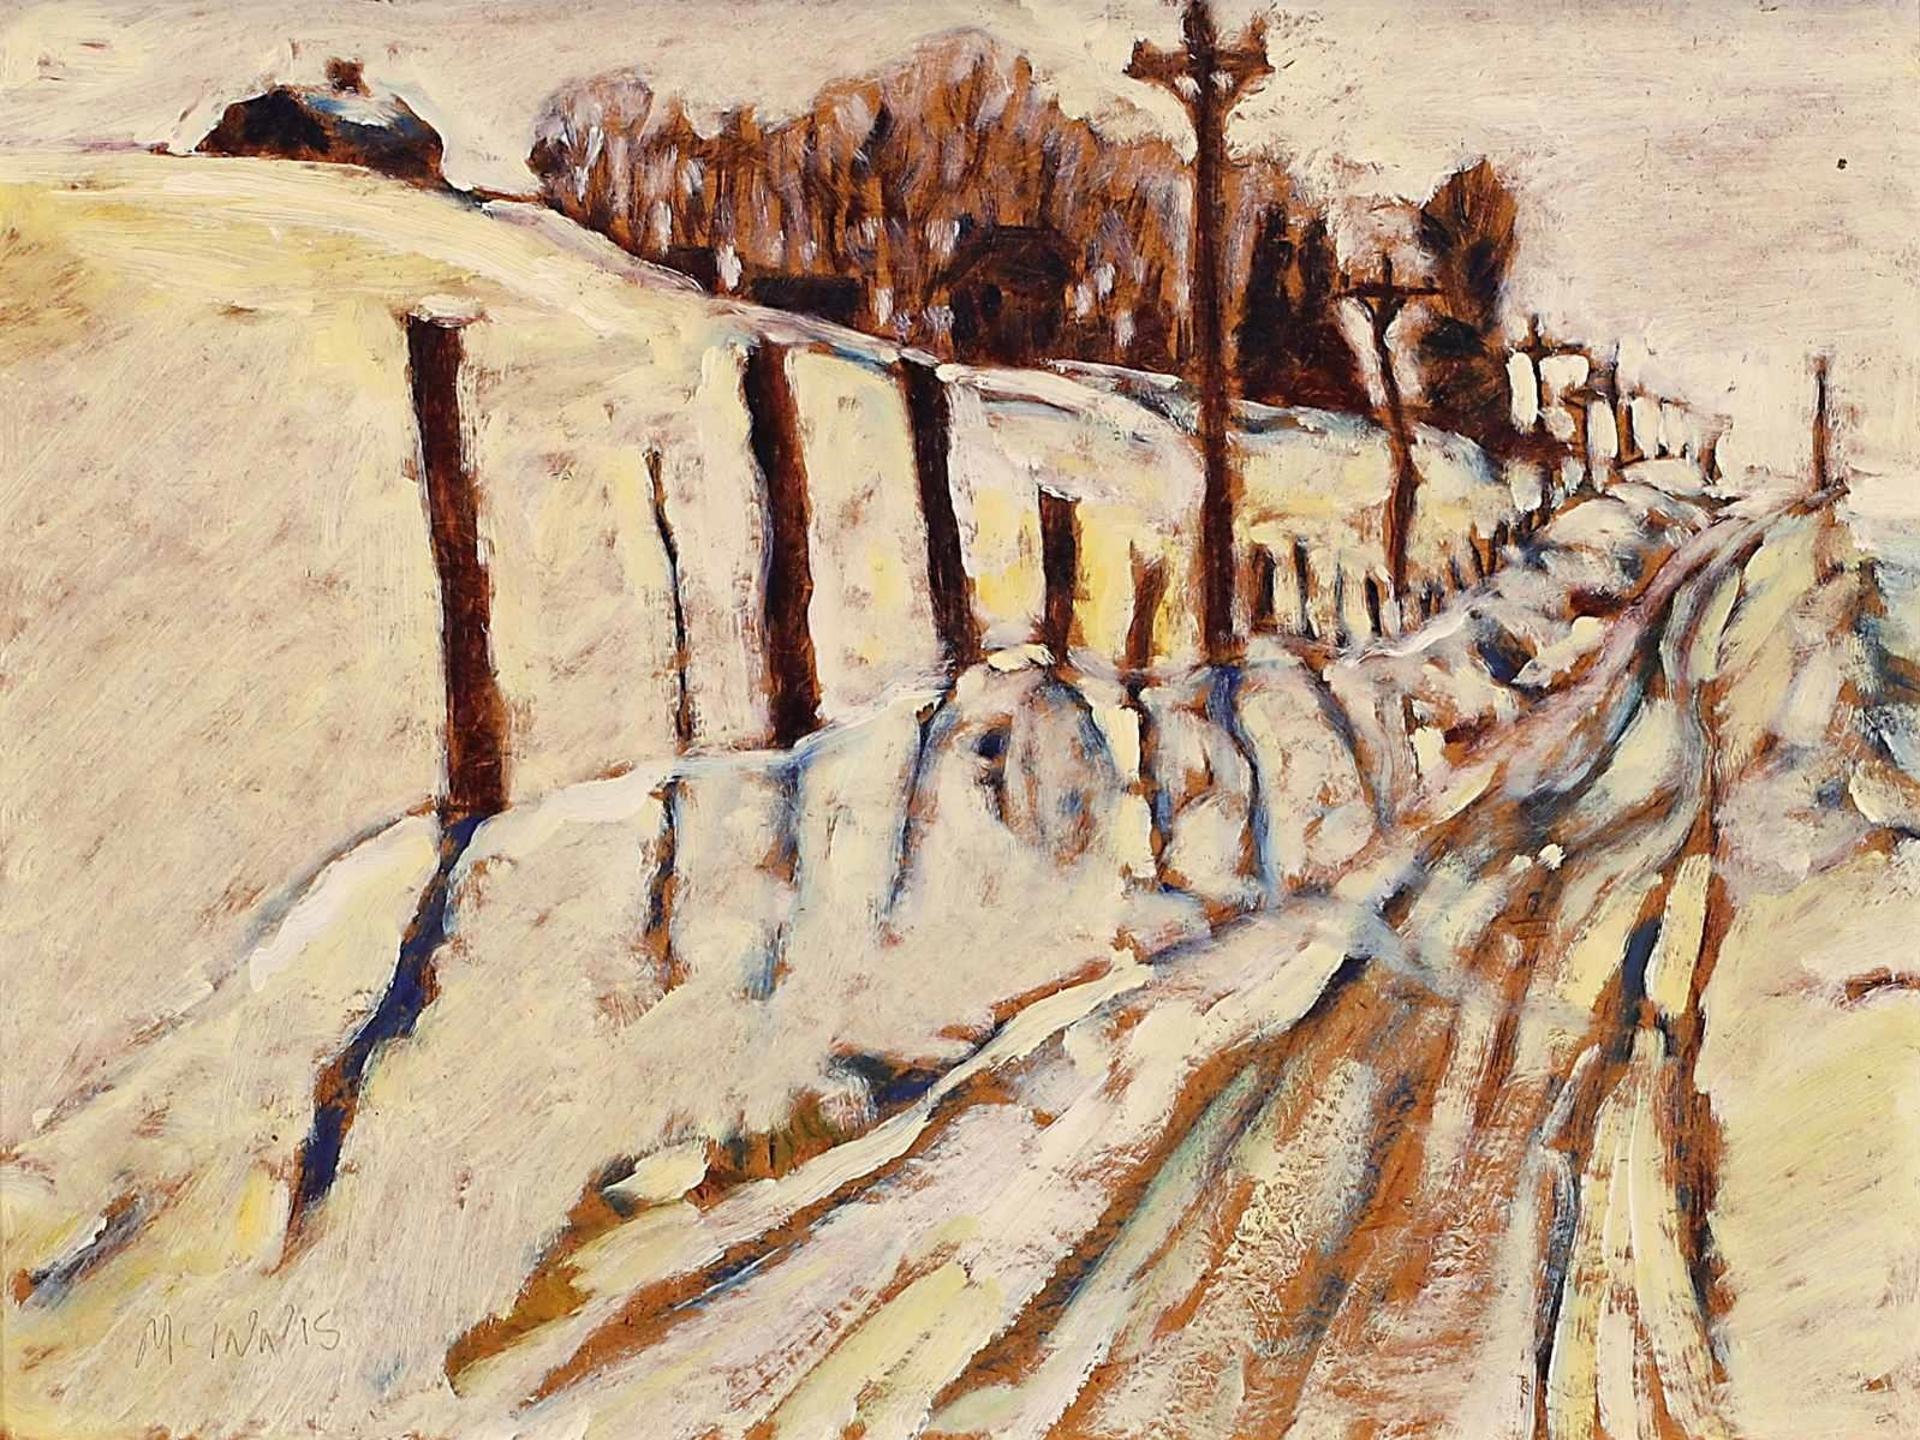 Robert Francis Michael McInnis (1942) - Prairie Road; 1978